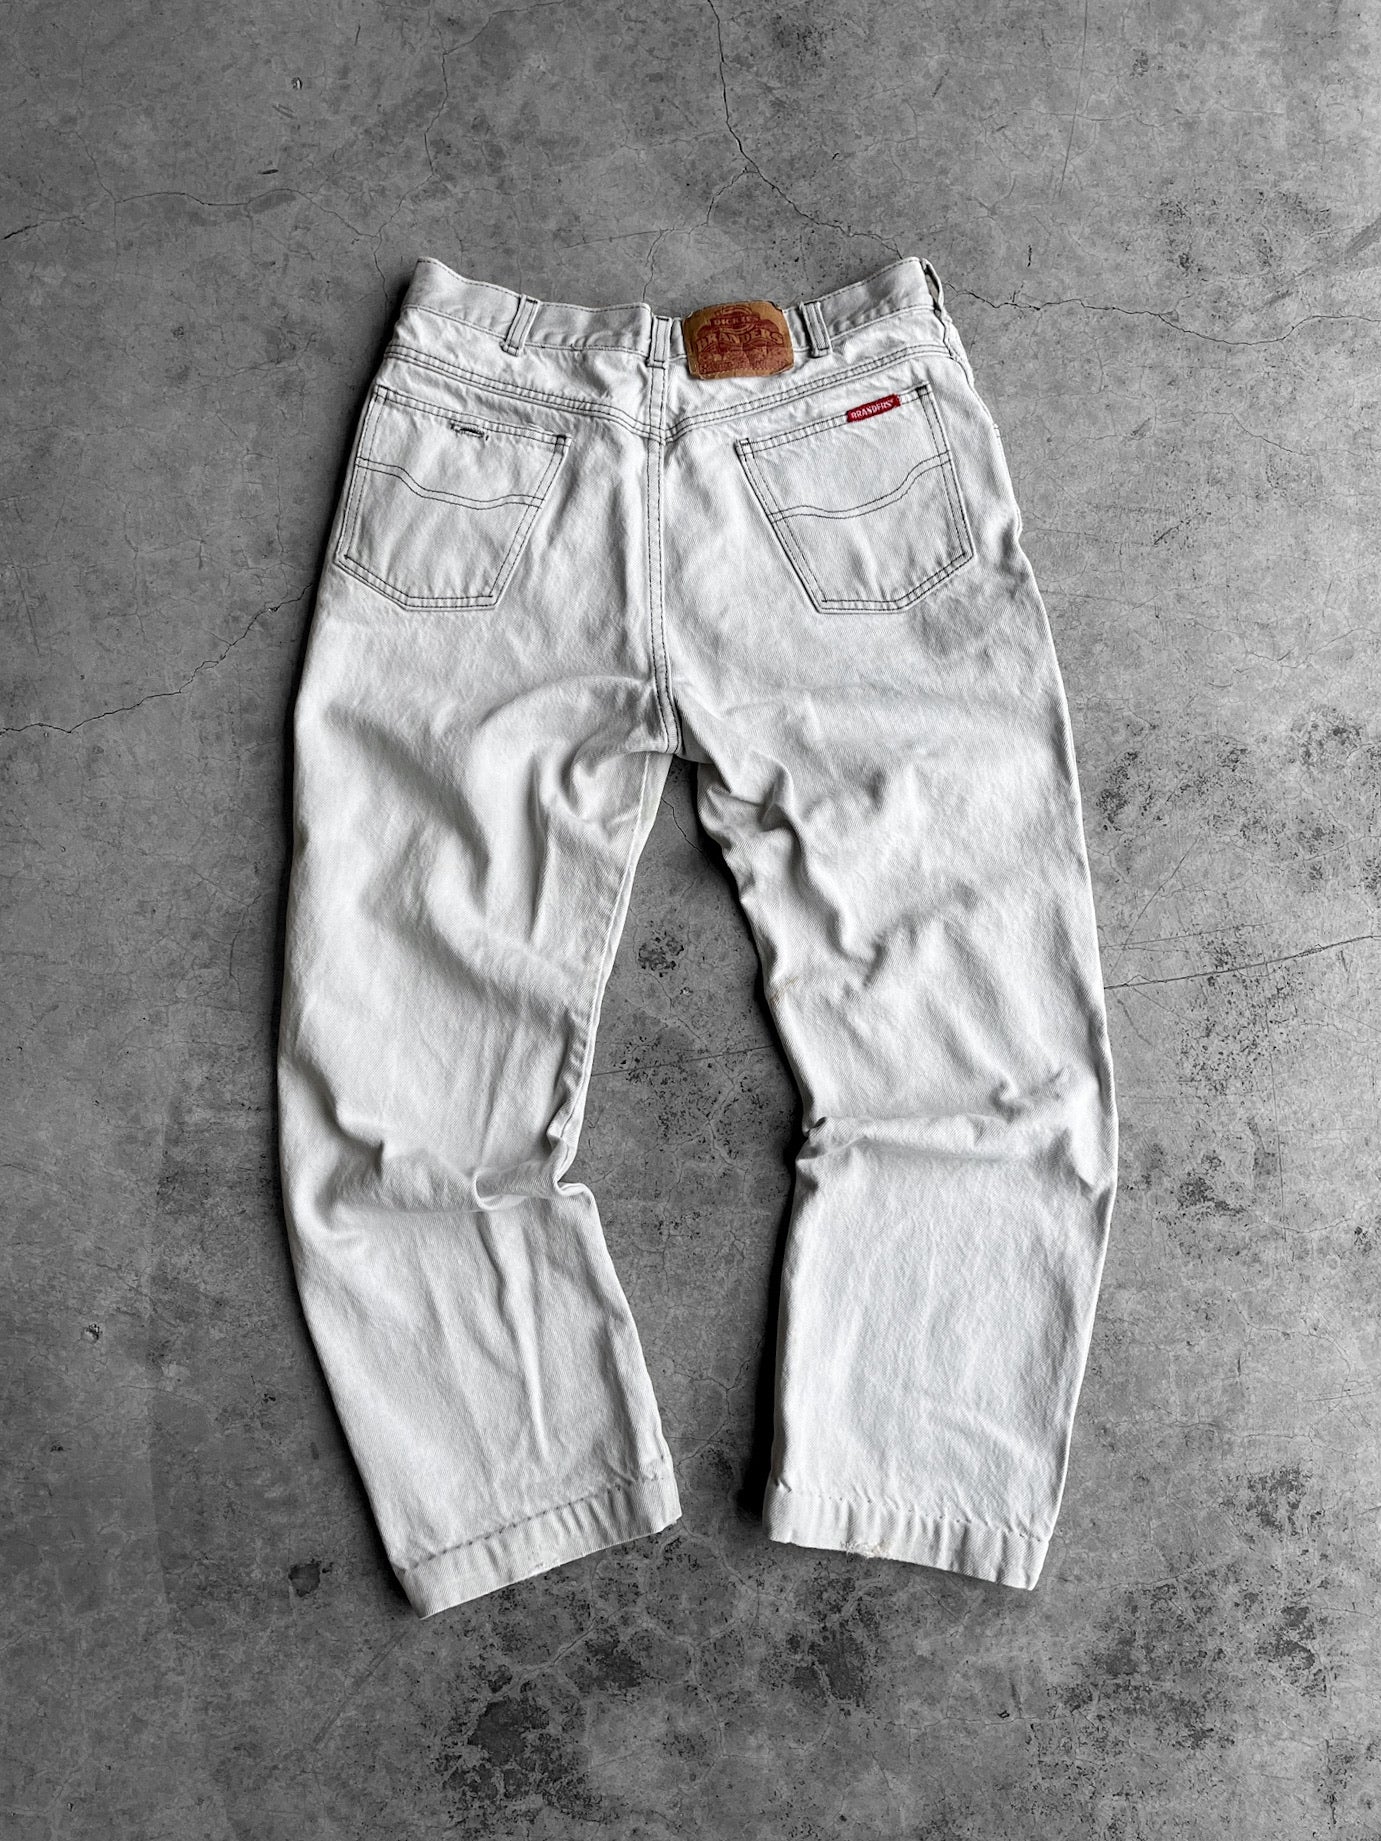 70’s Branders White Jeans - 34 x 30